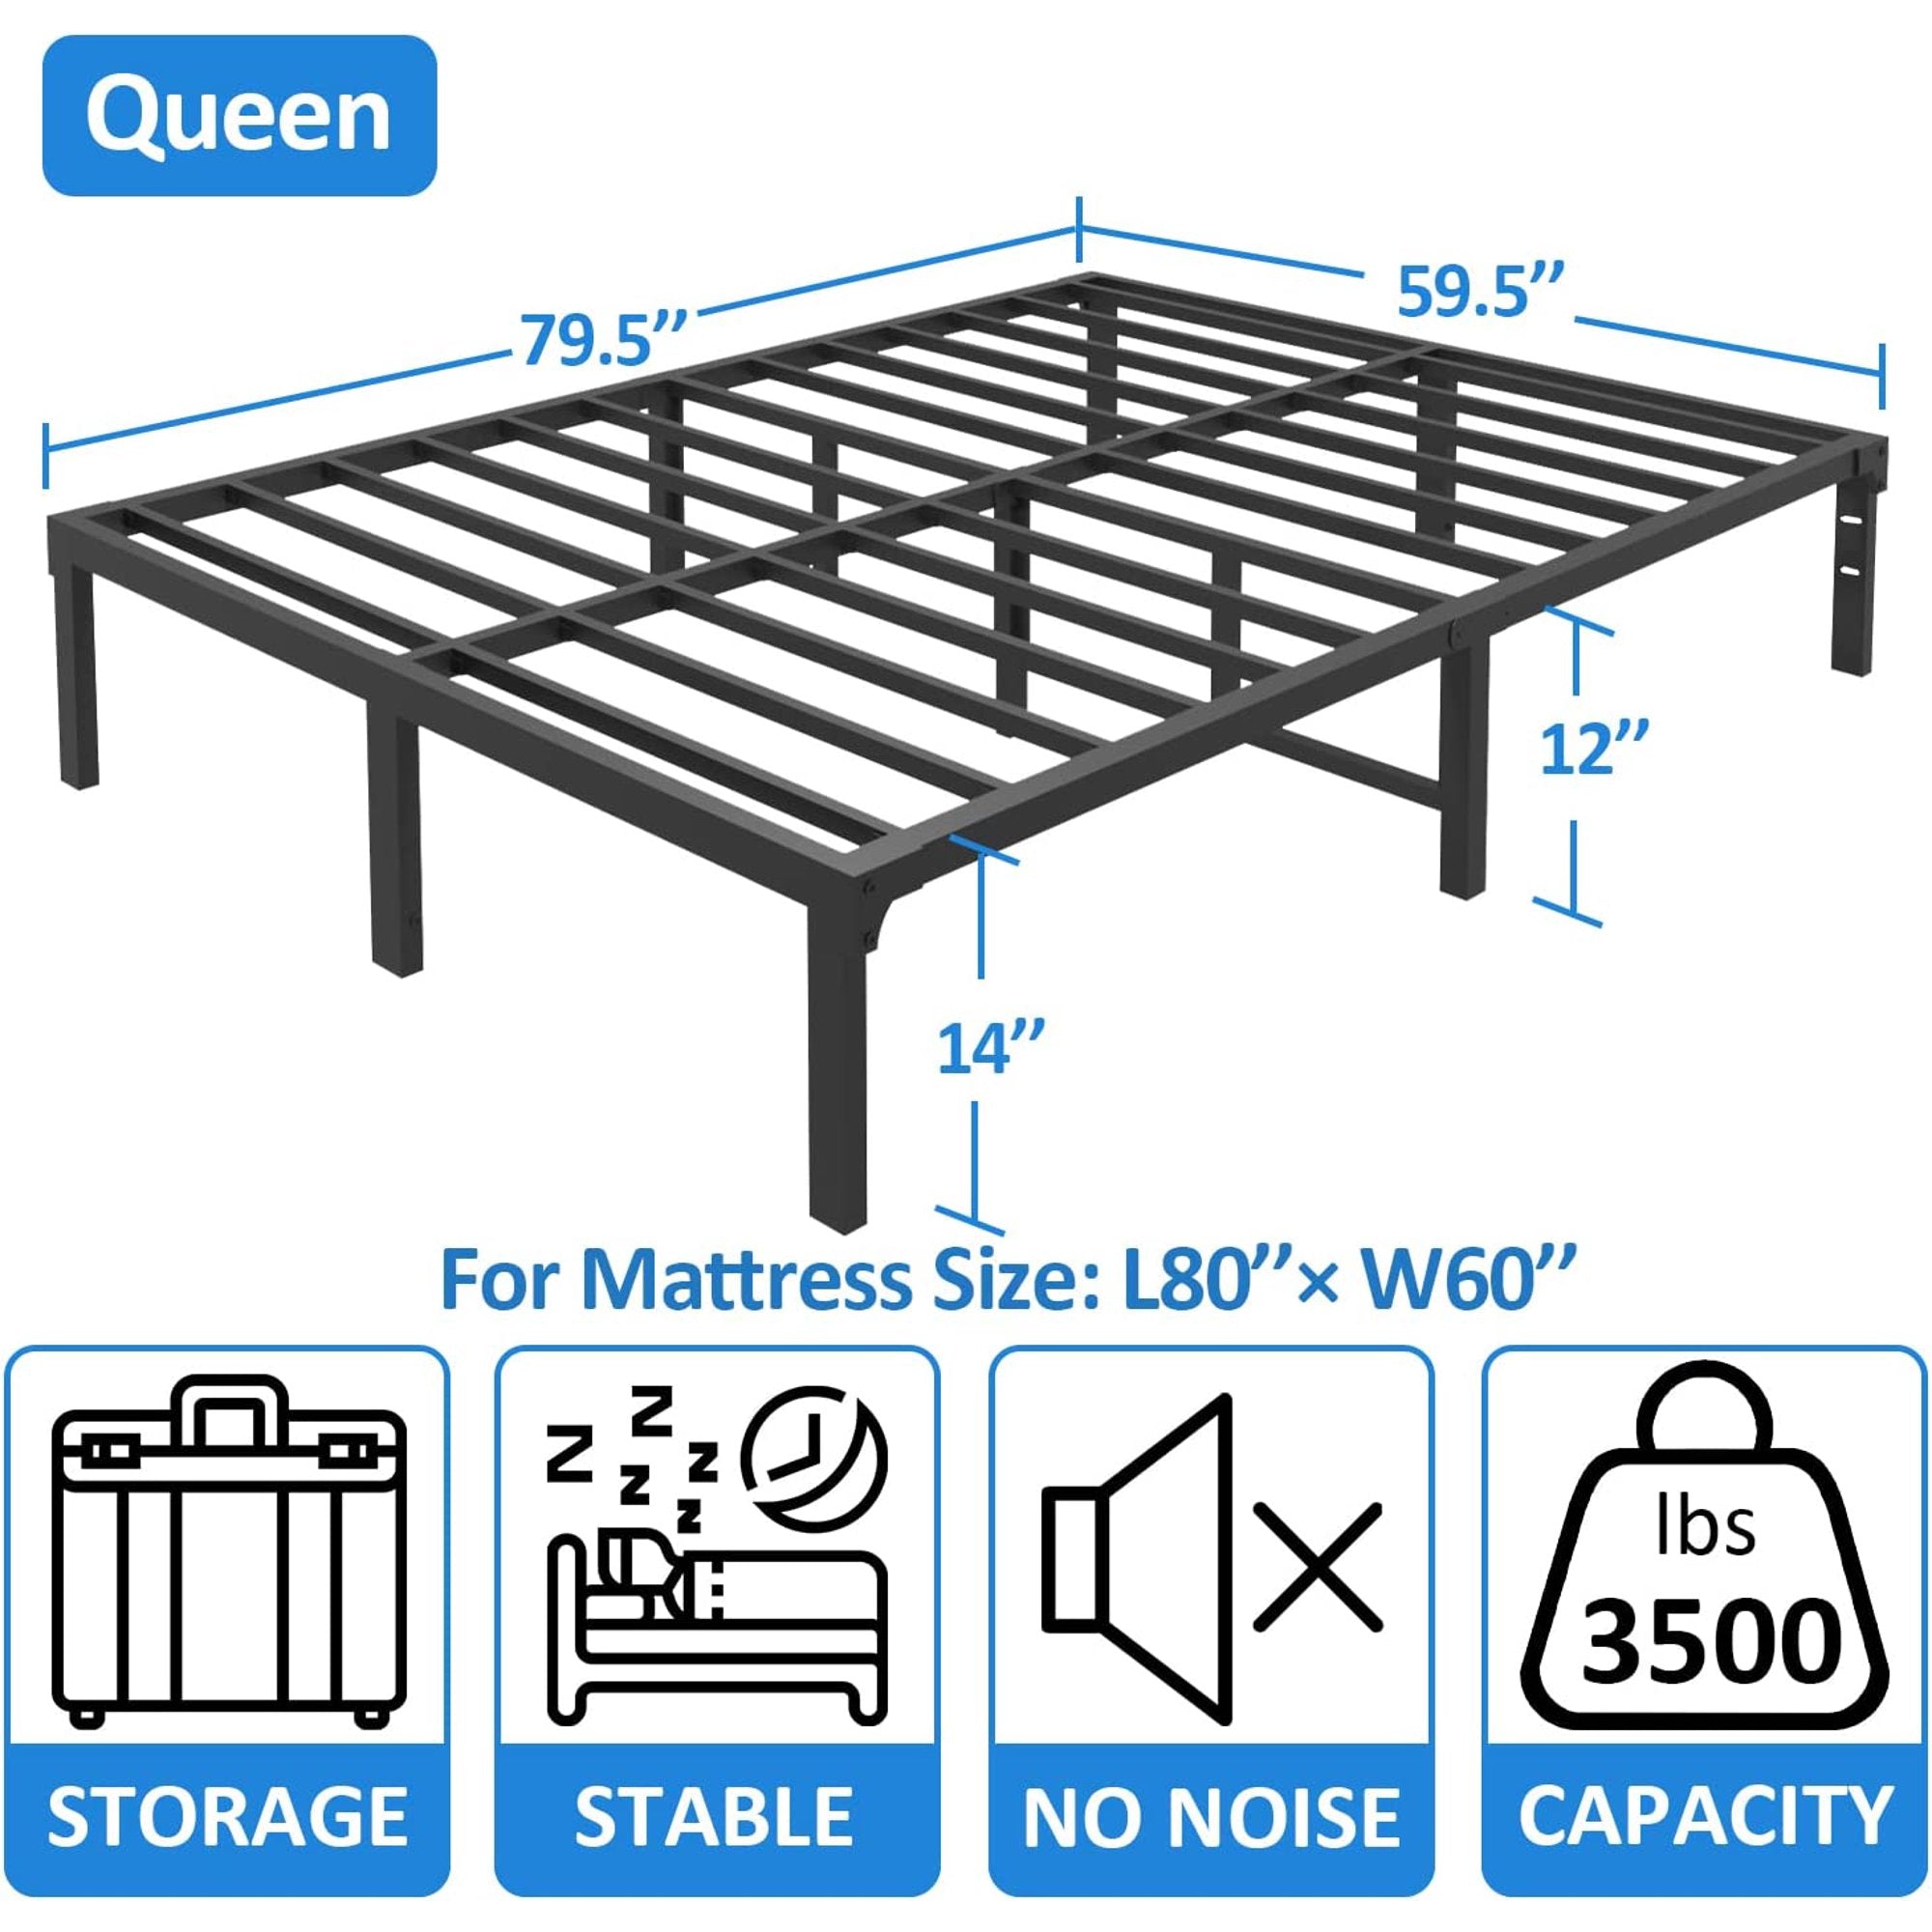 SKONYON 14 Inch Heavy Duty Metal Platform Bed Frame Queen Size